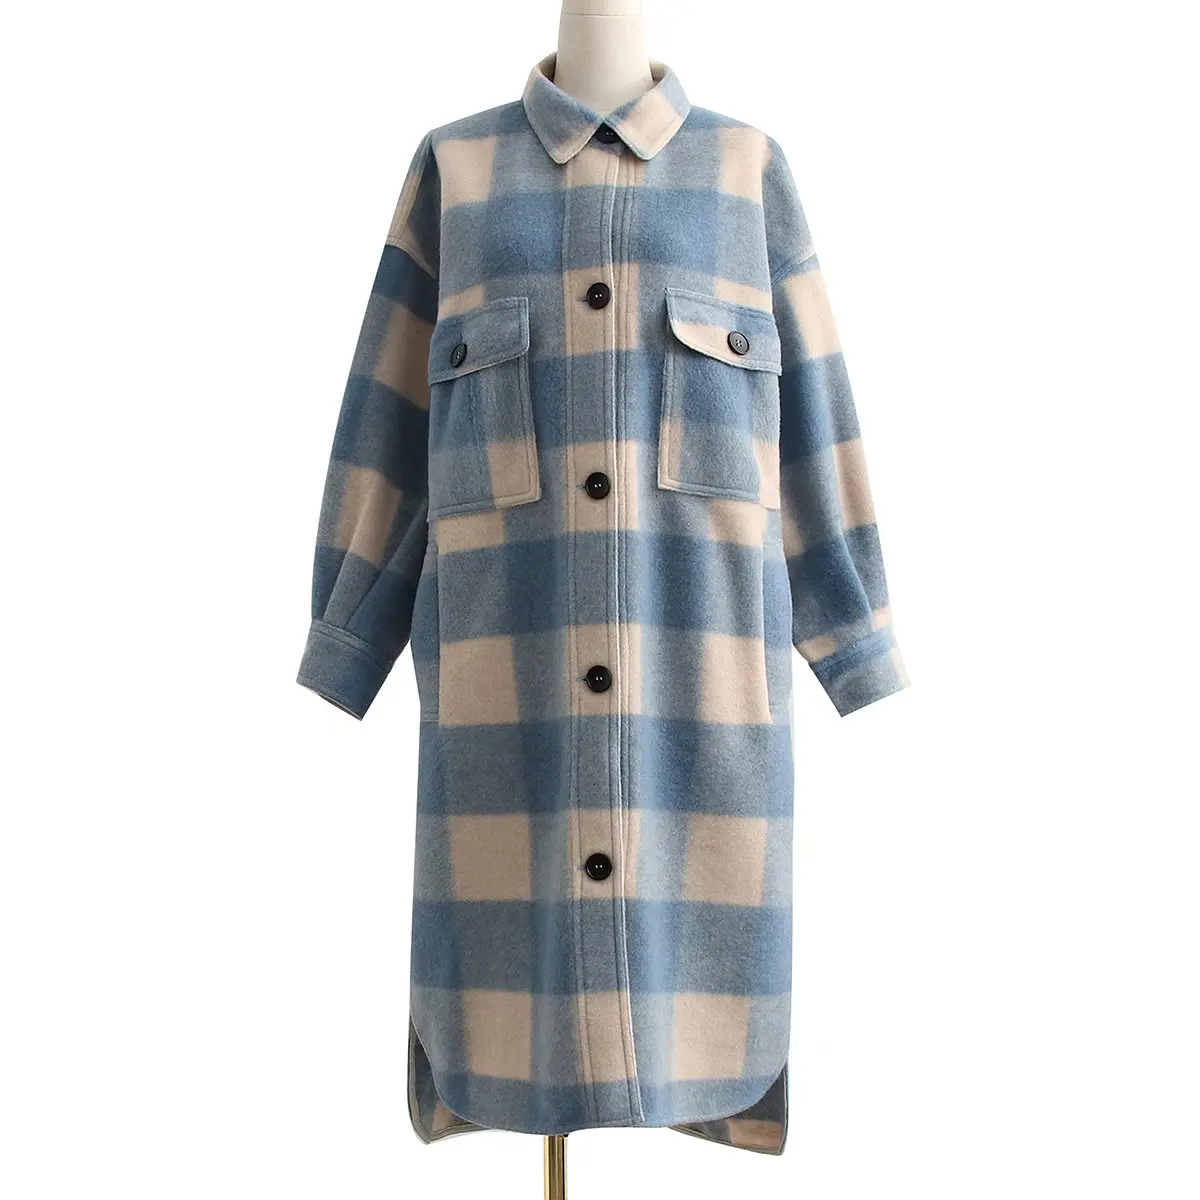 Korean fashion trench coat  fall jacket blue plaid tweed jackets streetw... - $397.26